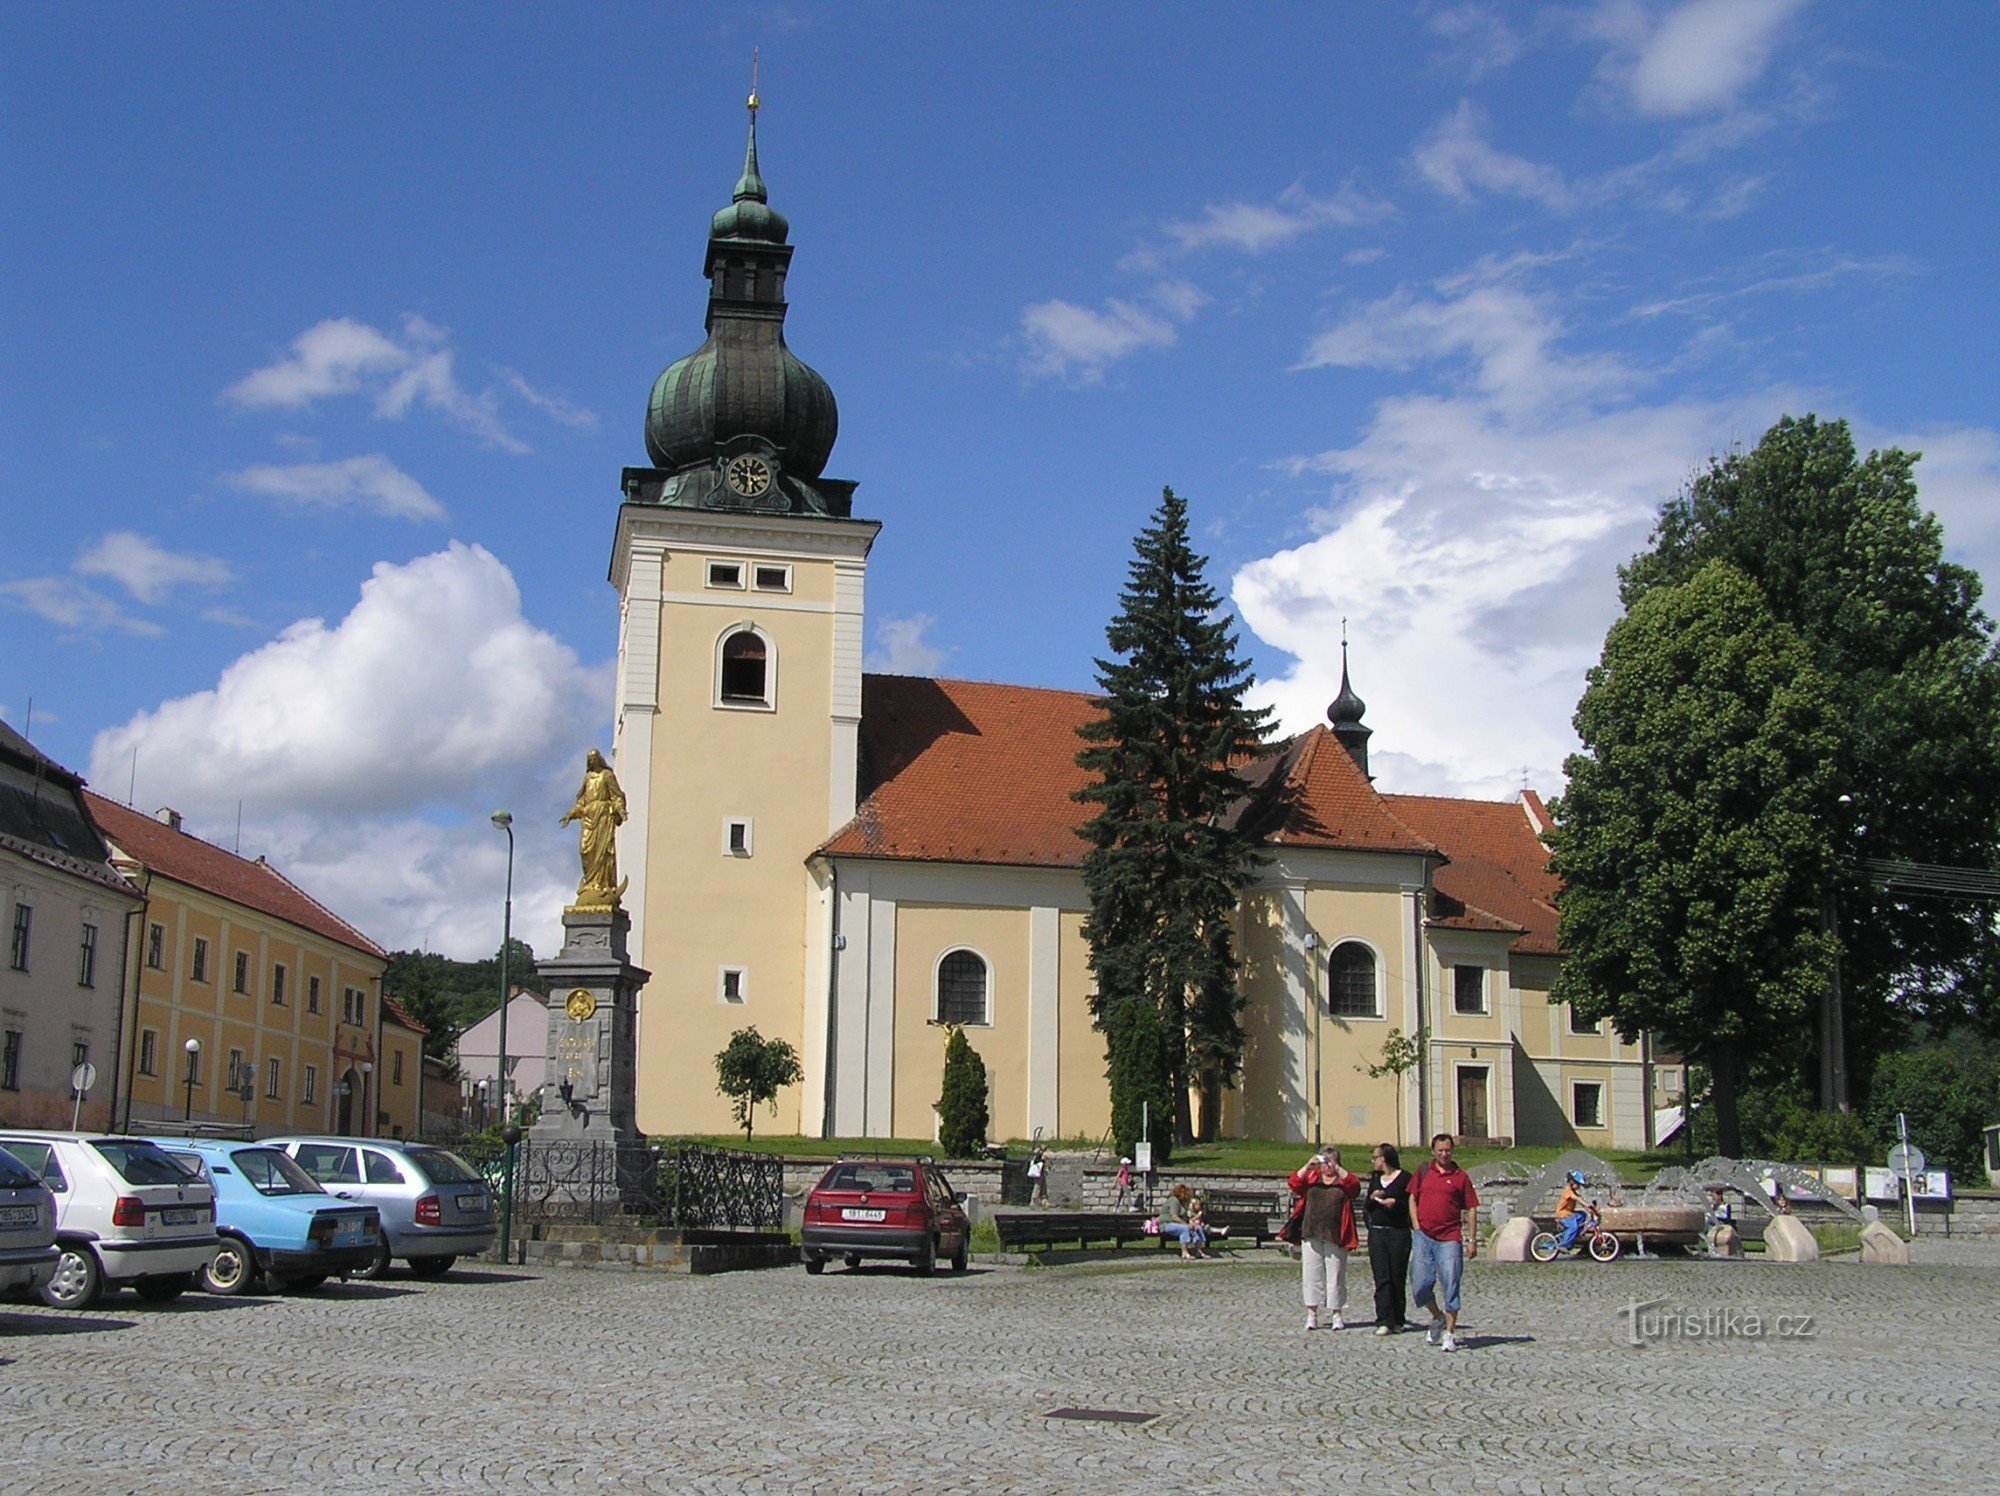 Kunštát - Biserica Sf. Stanislav (iulie 2009)